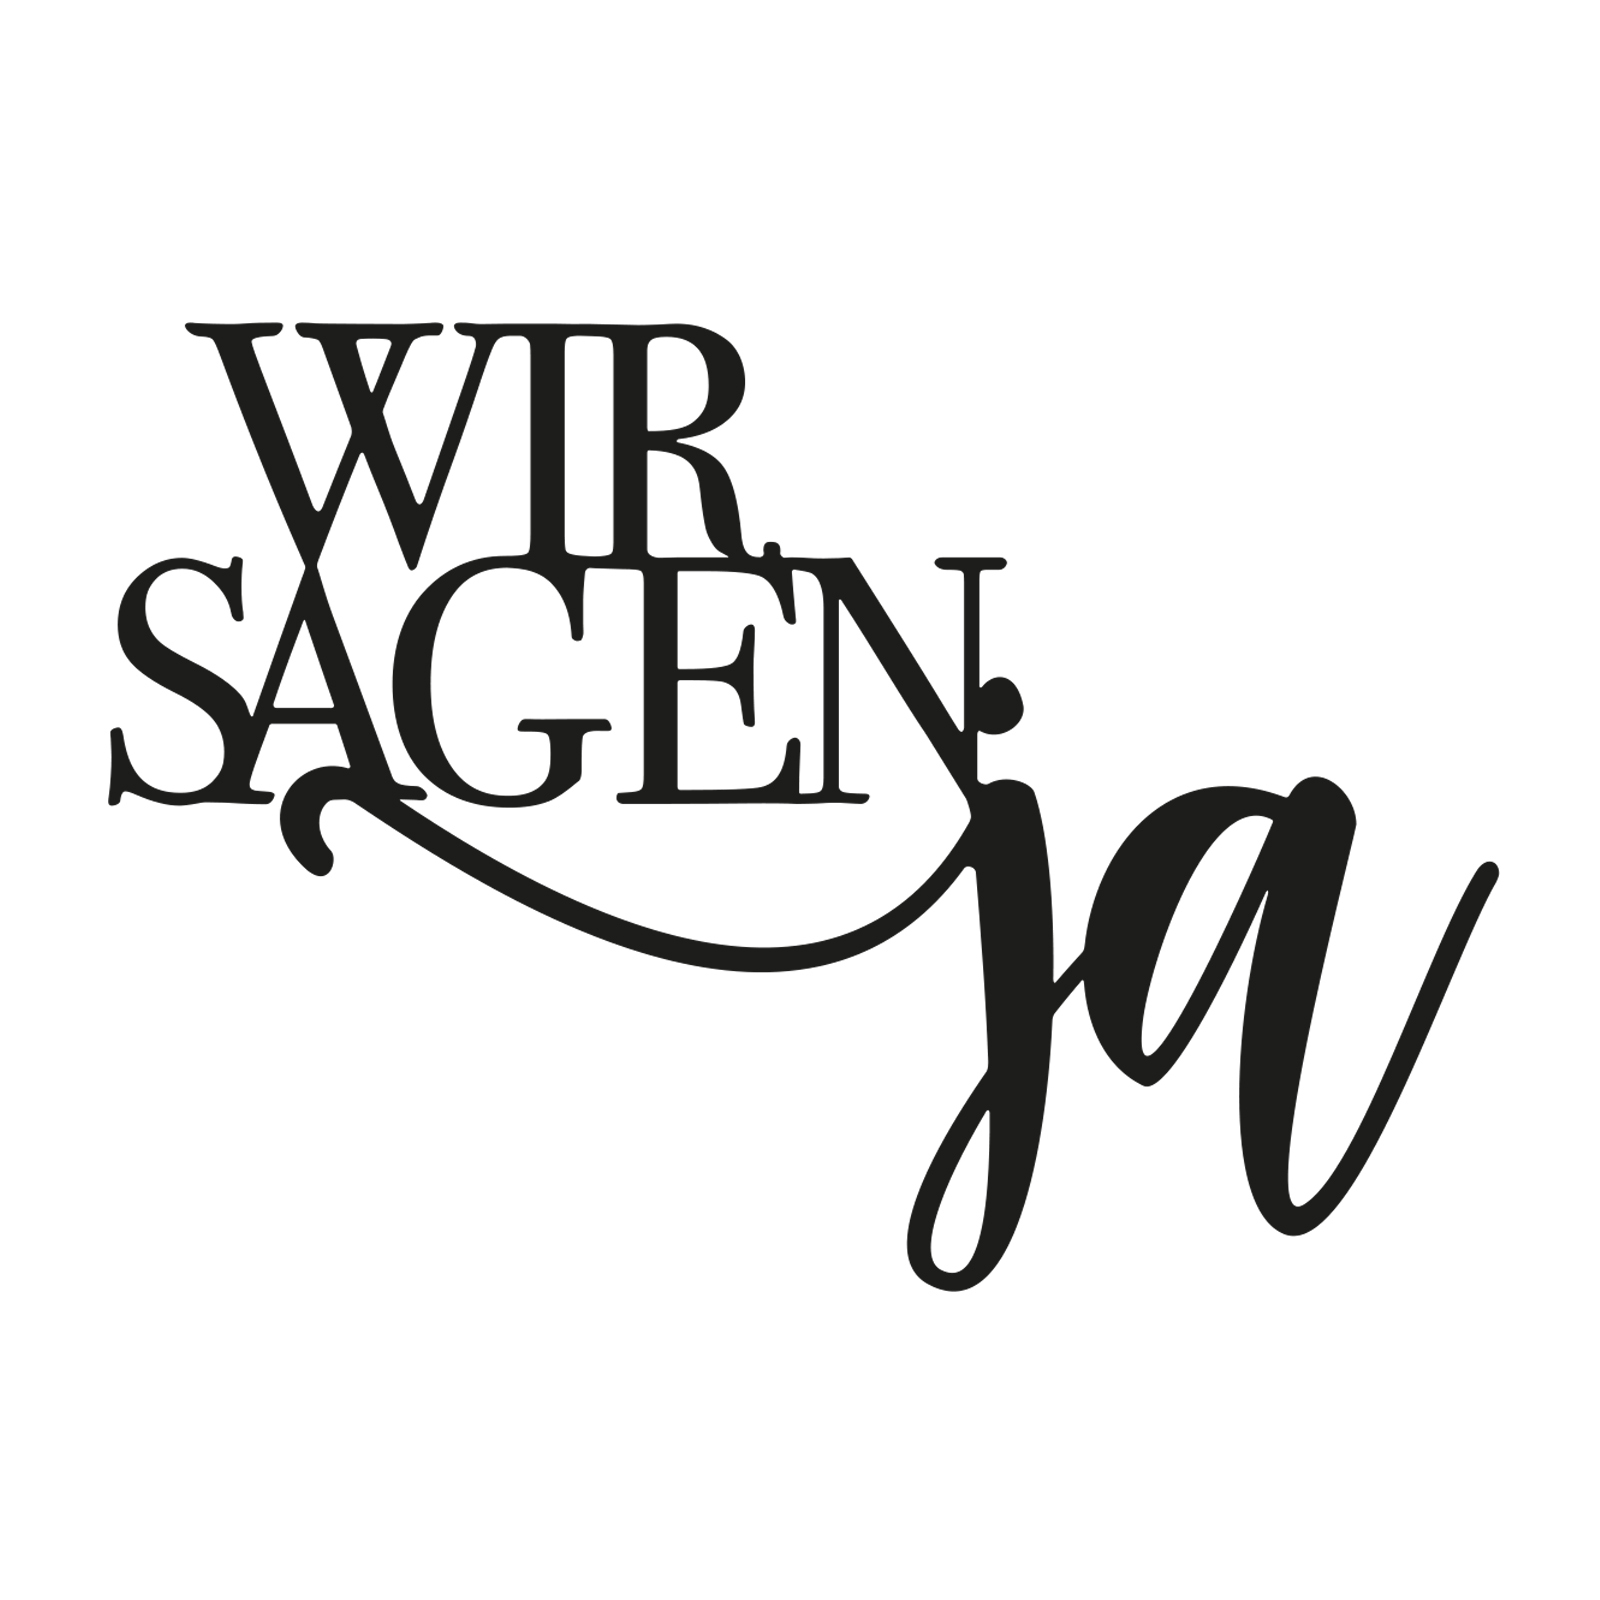 Mundart Stempel • Matrice de découpe avec texte allemand "wir sagen ja"